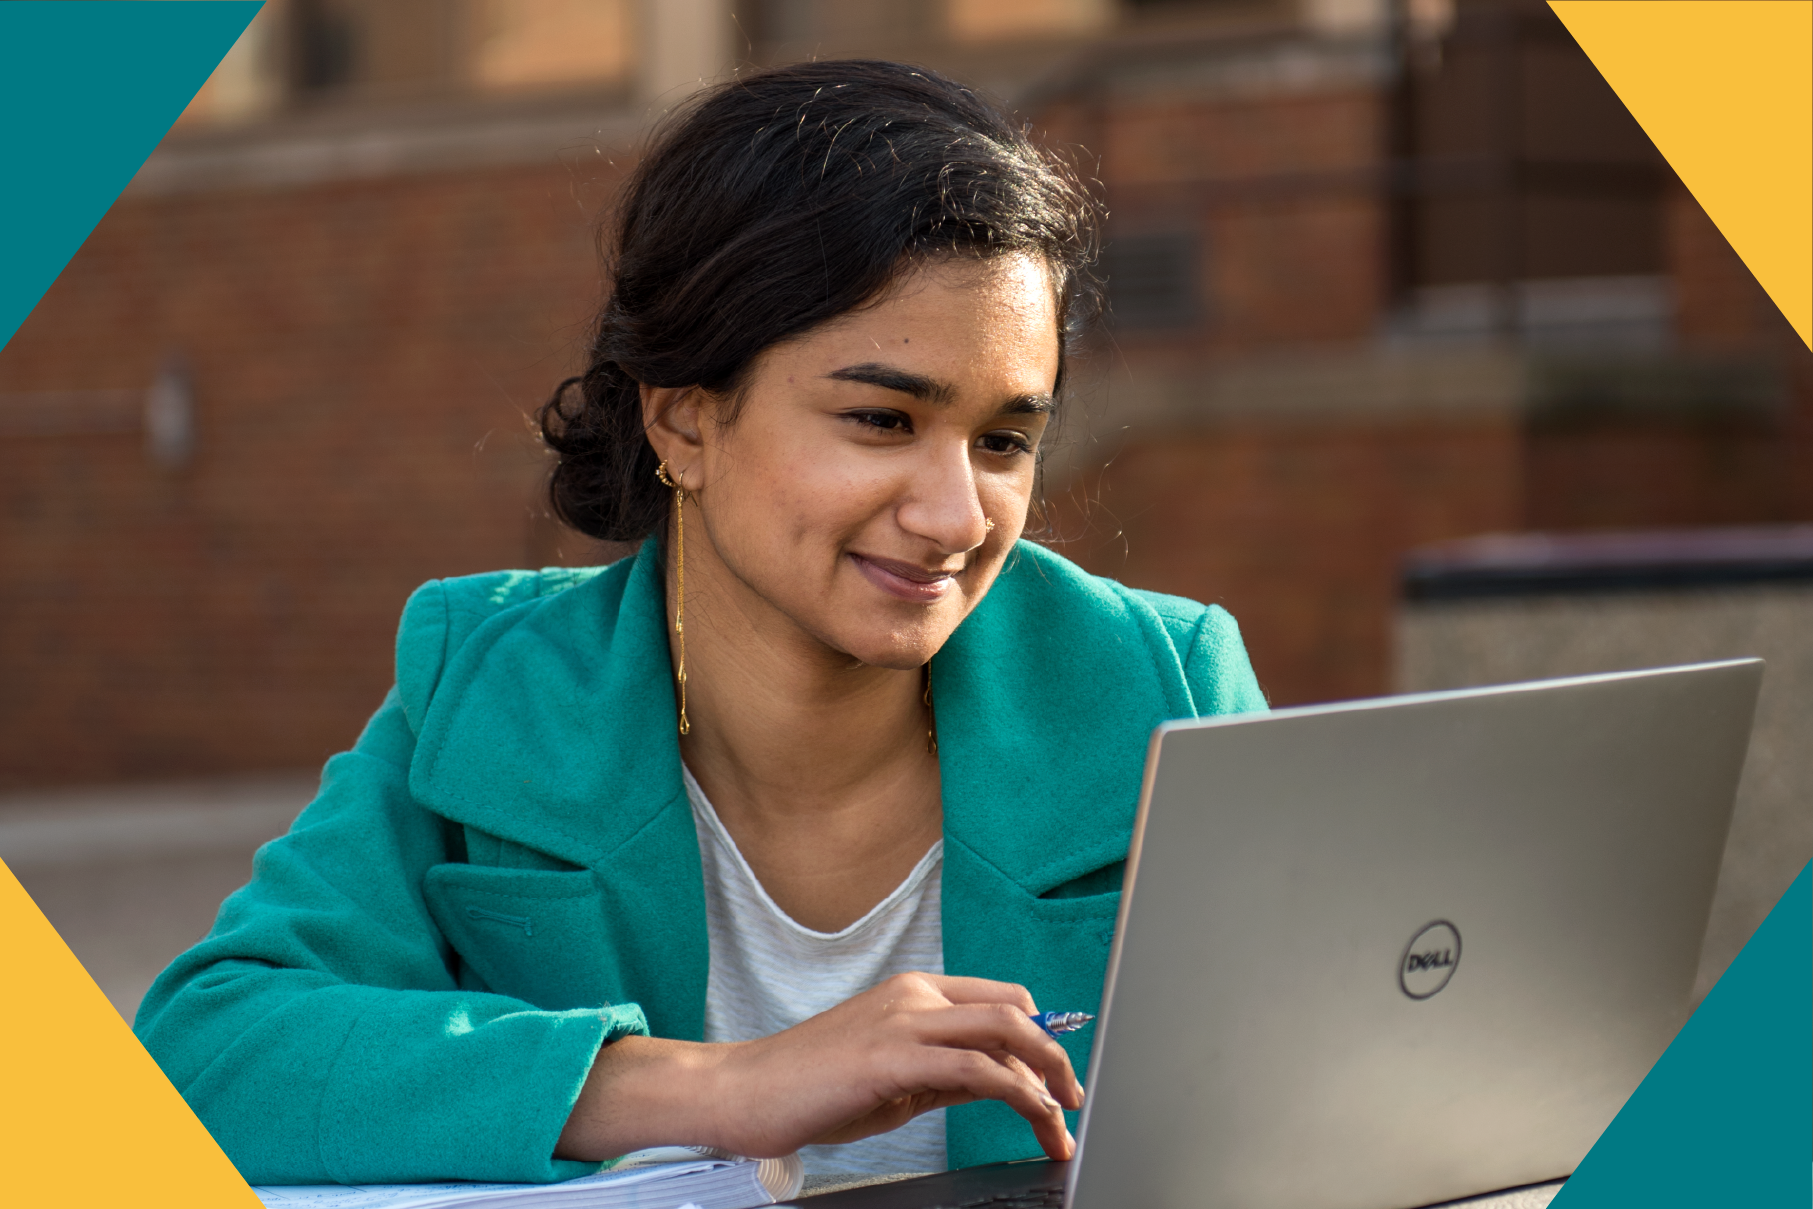 student smiling at laptop